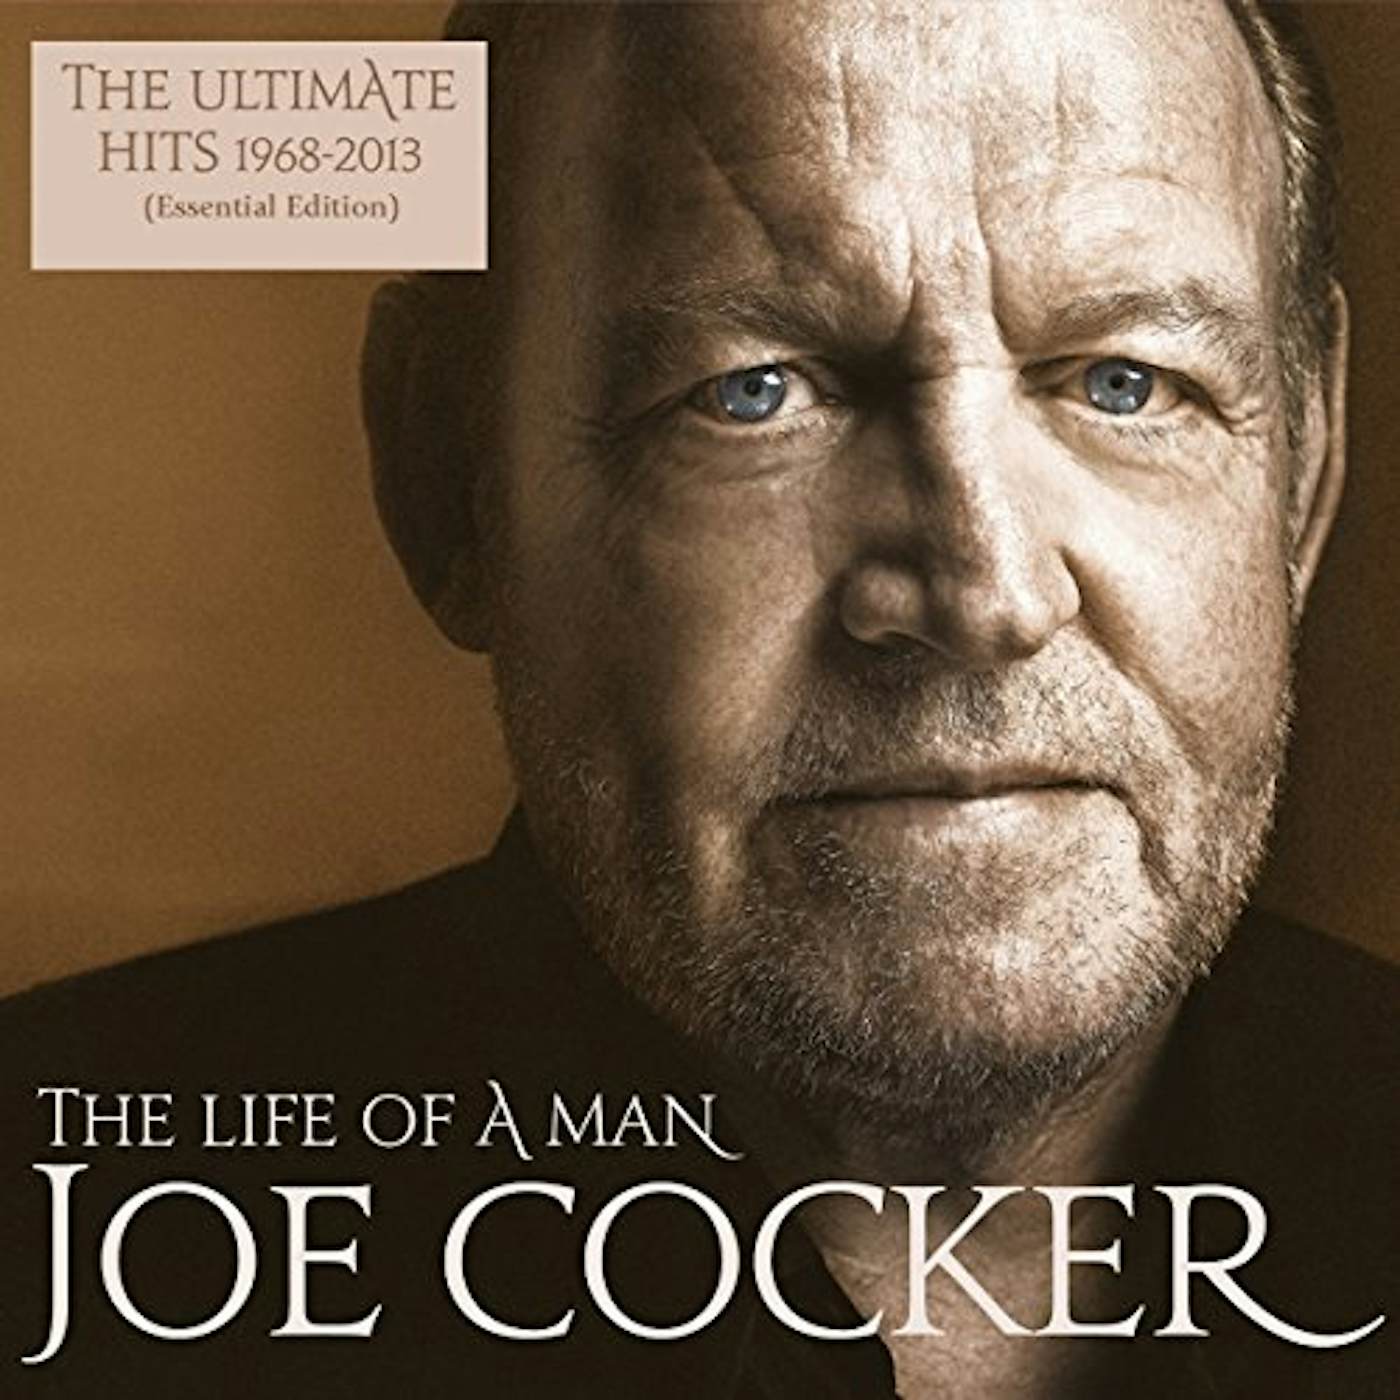 Joe Cocker LIFE OF A MAN: ULTIMATE HITS 1968-2013 Vinyl Record